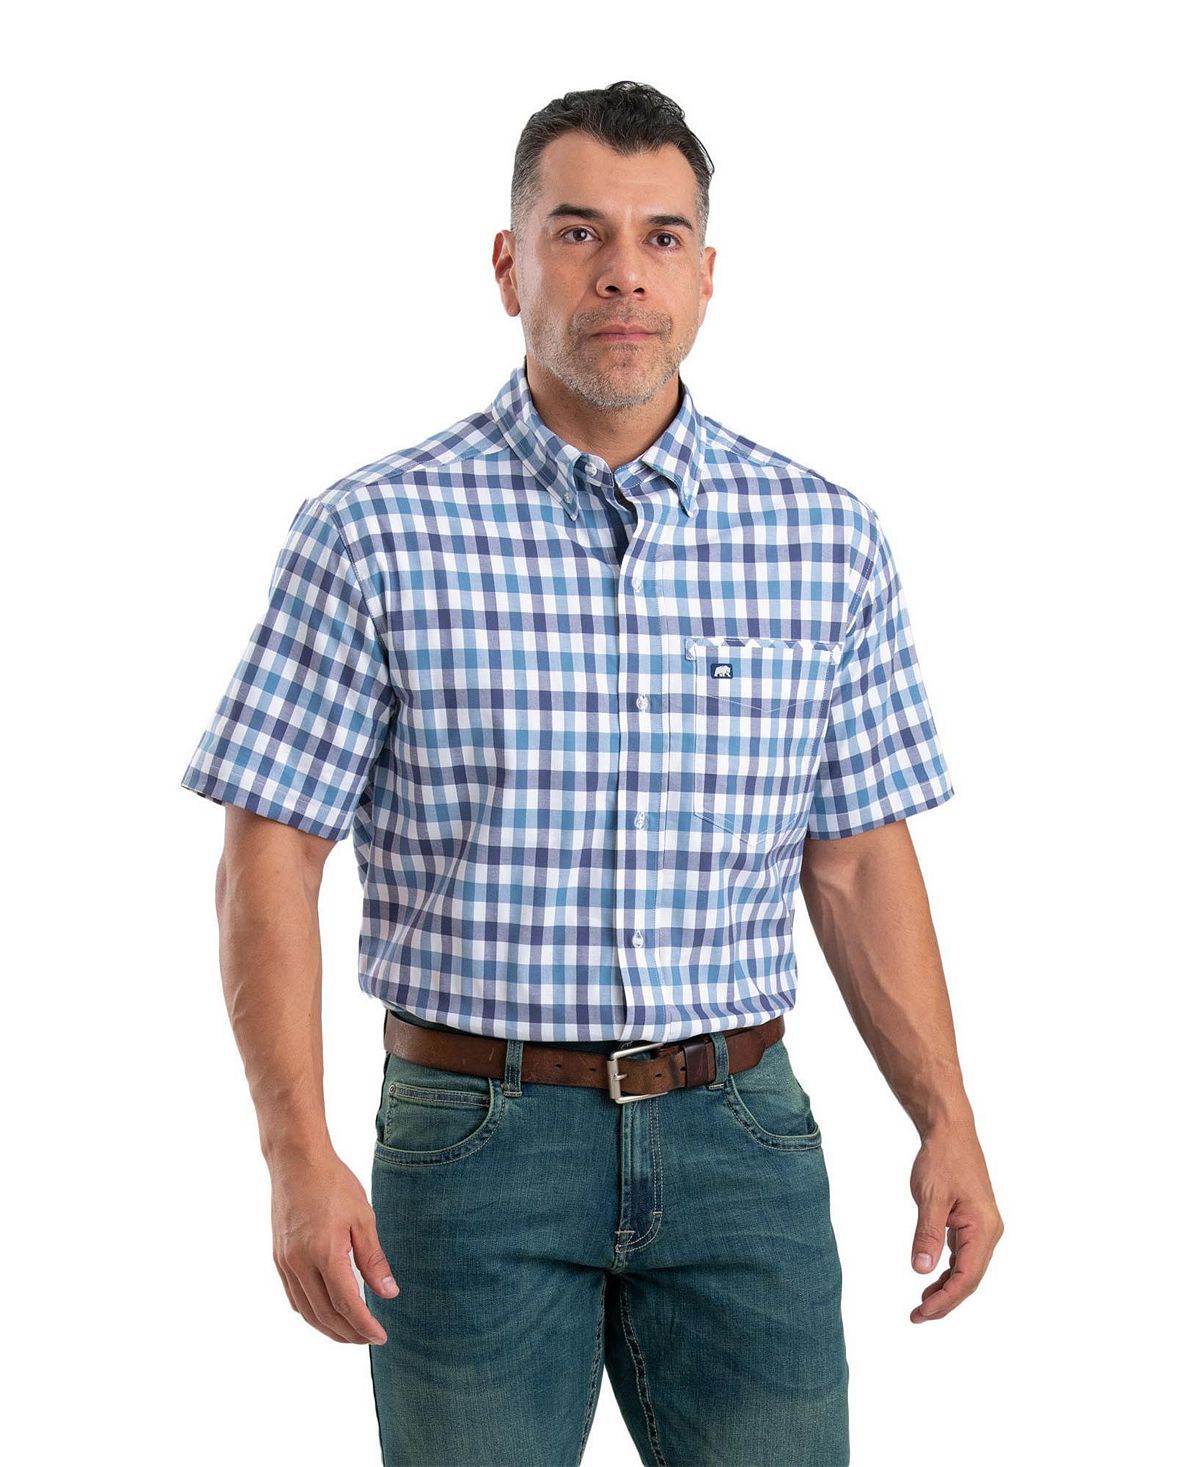 Мужская рубашка на пуговицах с коротким рукавом Foreman Flex Berne george foreman 25800 56